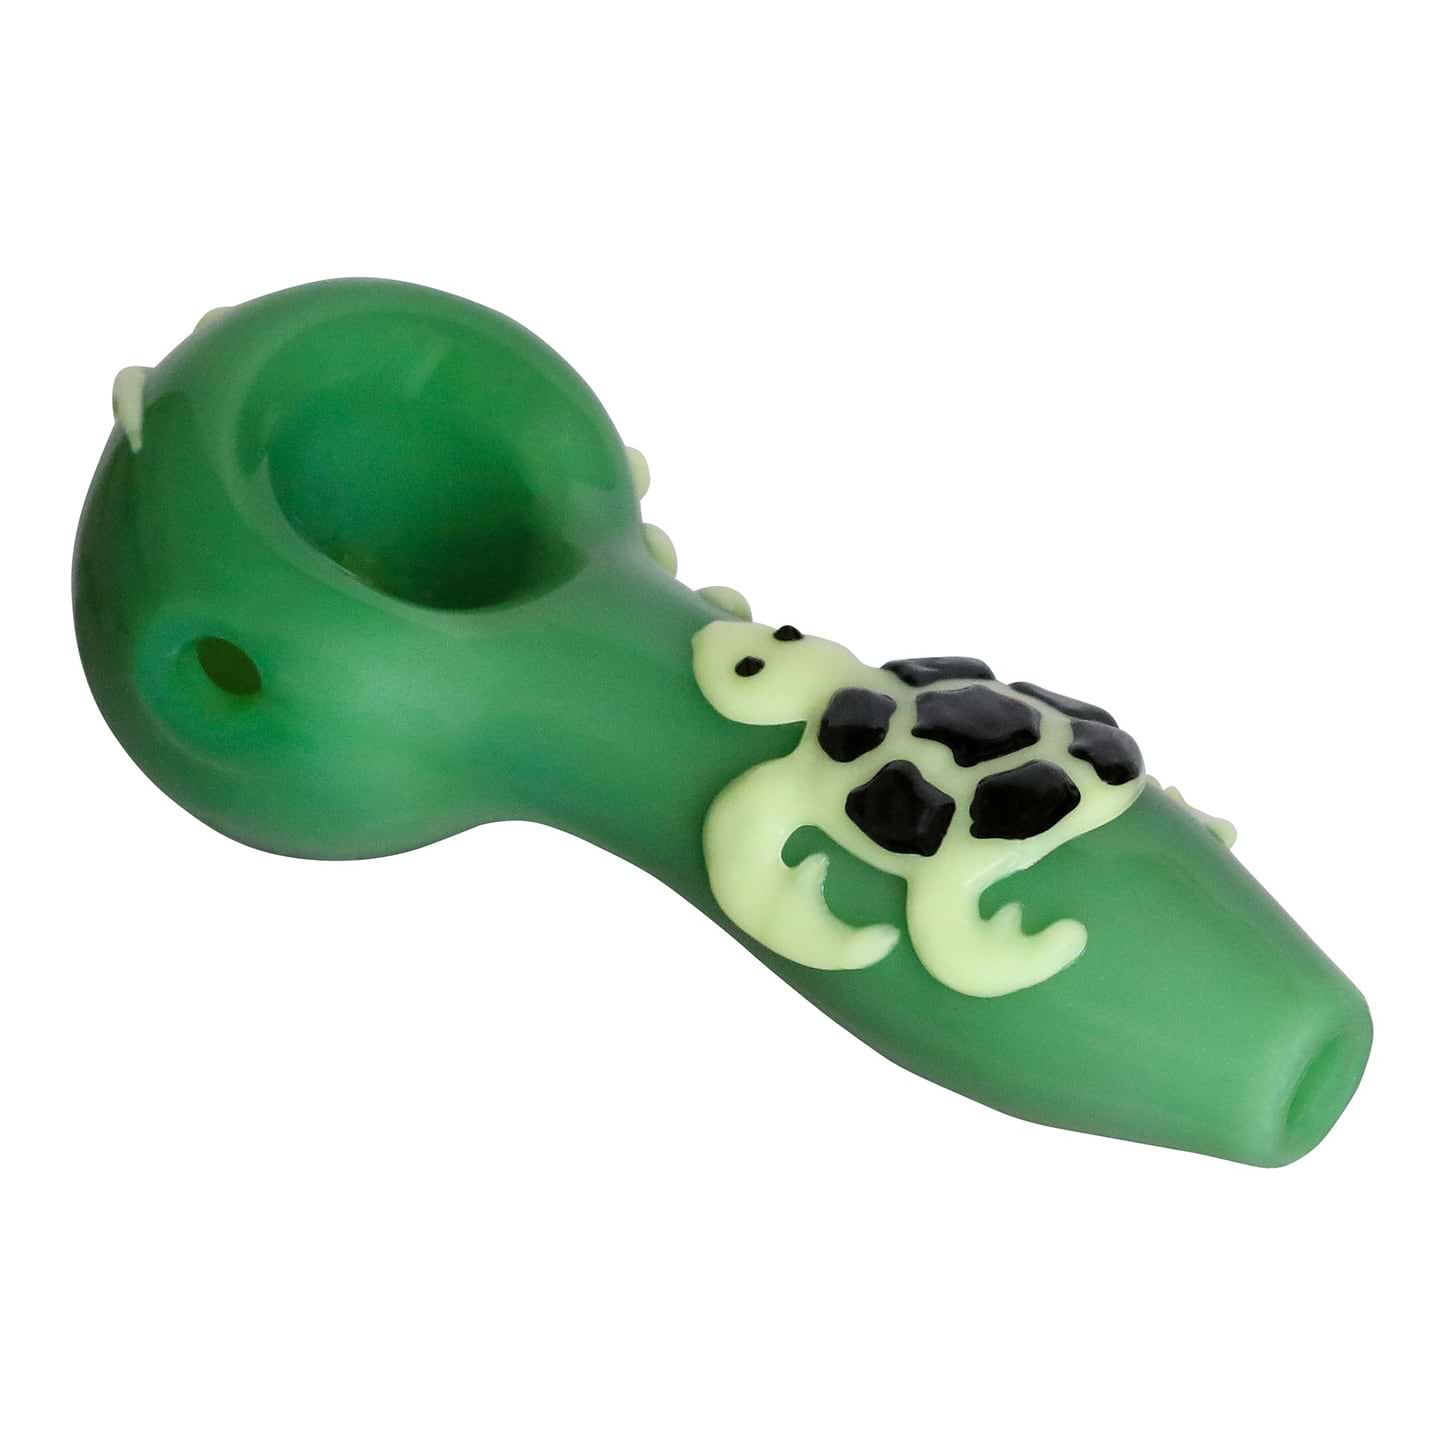 Glowing Turtle Pipe - 4in Green